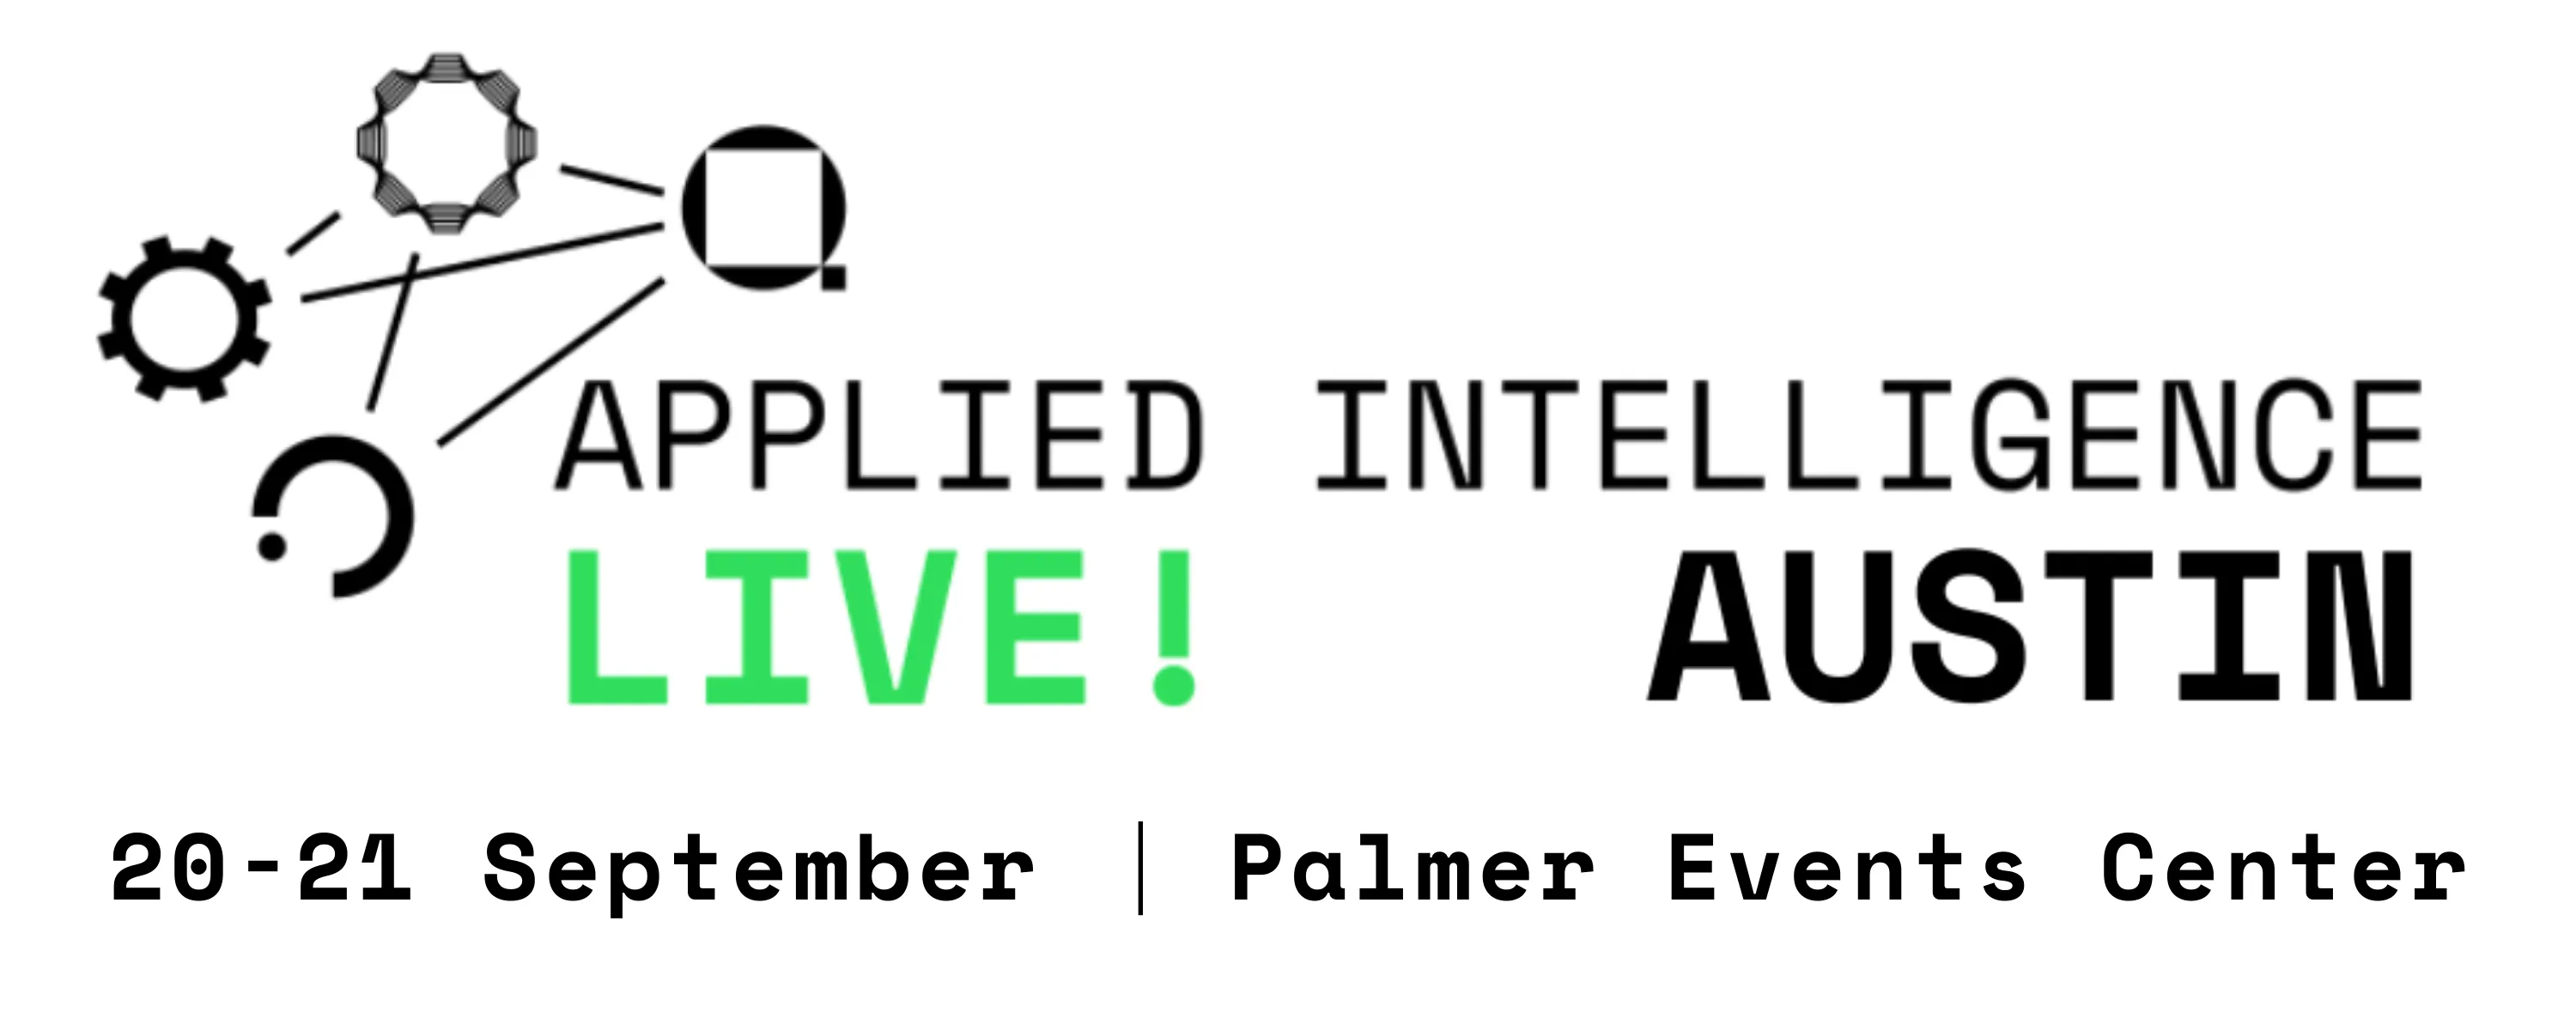 Applied Intelligence Live! Austin